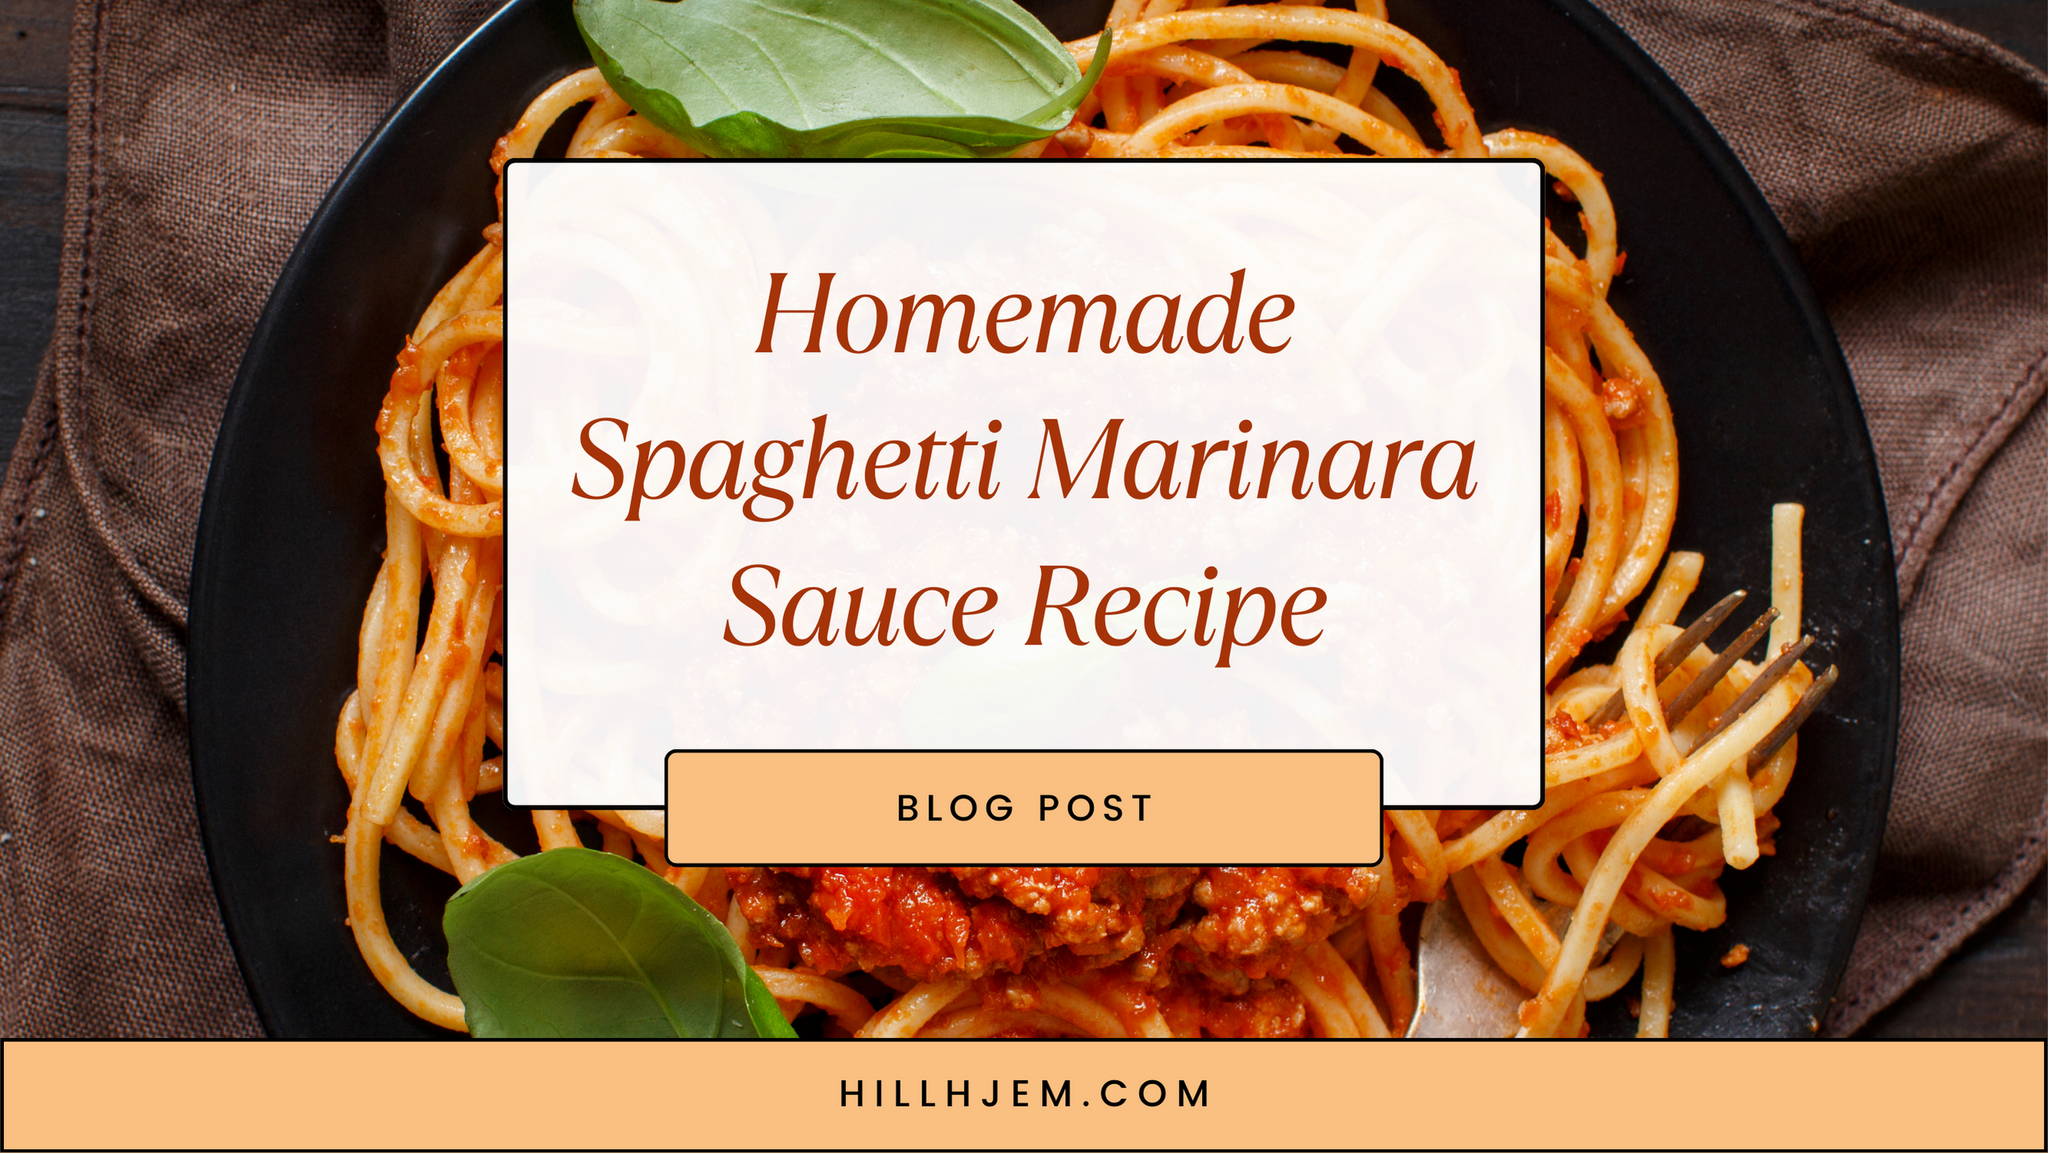 Homemade Spaghetti Marinara Sauce Recipe